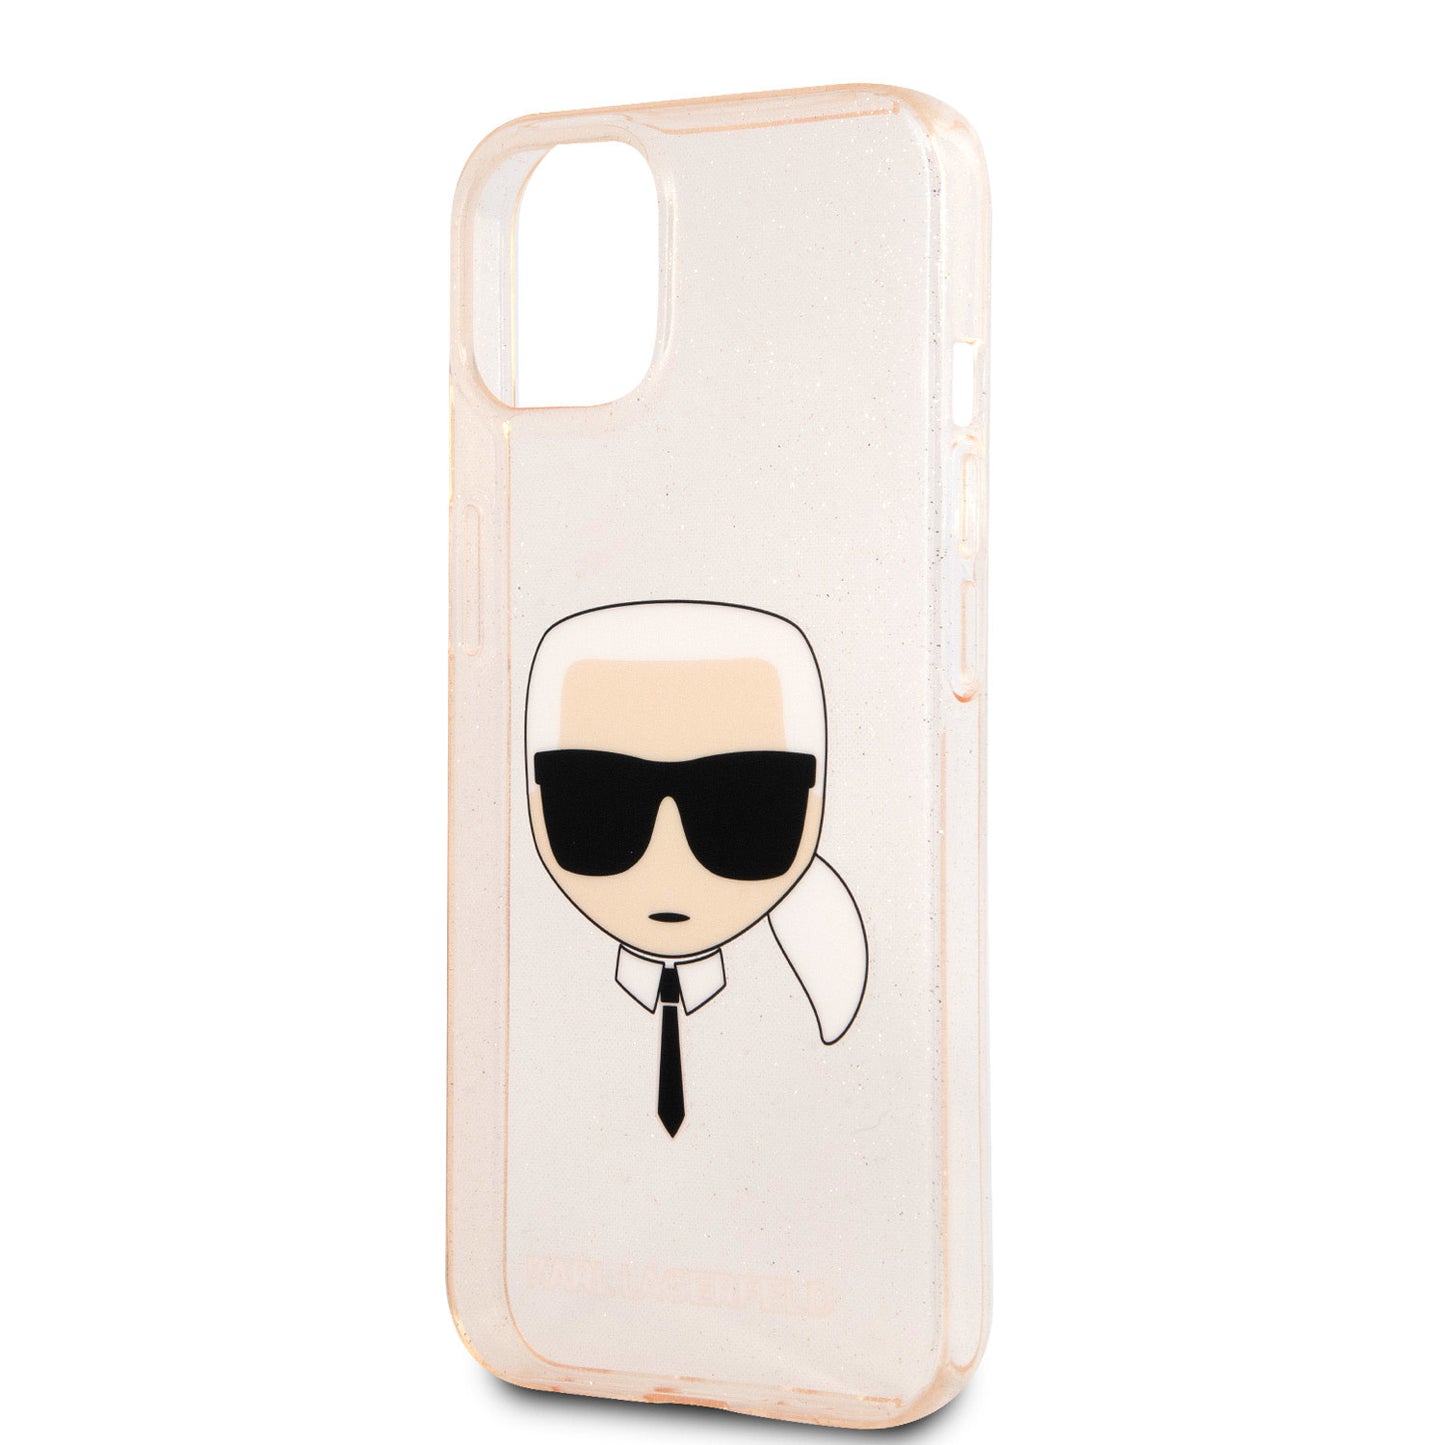 Karl Lagerfeld iPhone 13 Mini Backcover - Karl - Transparant Goud